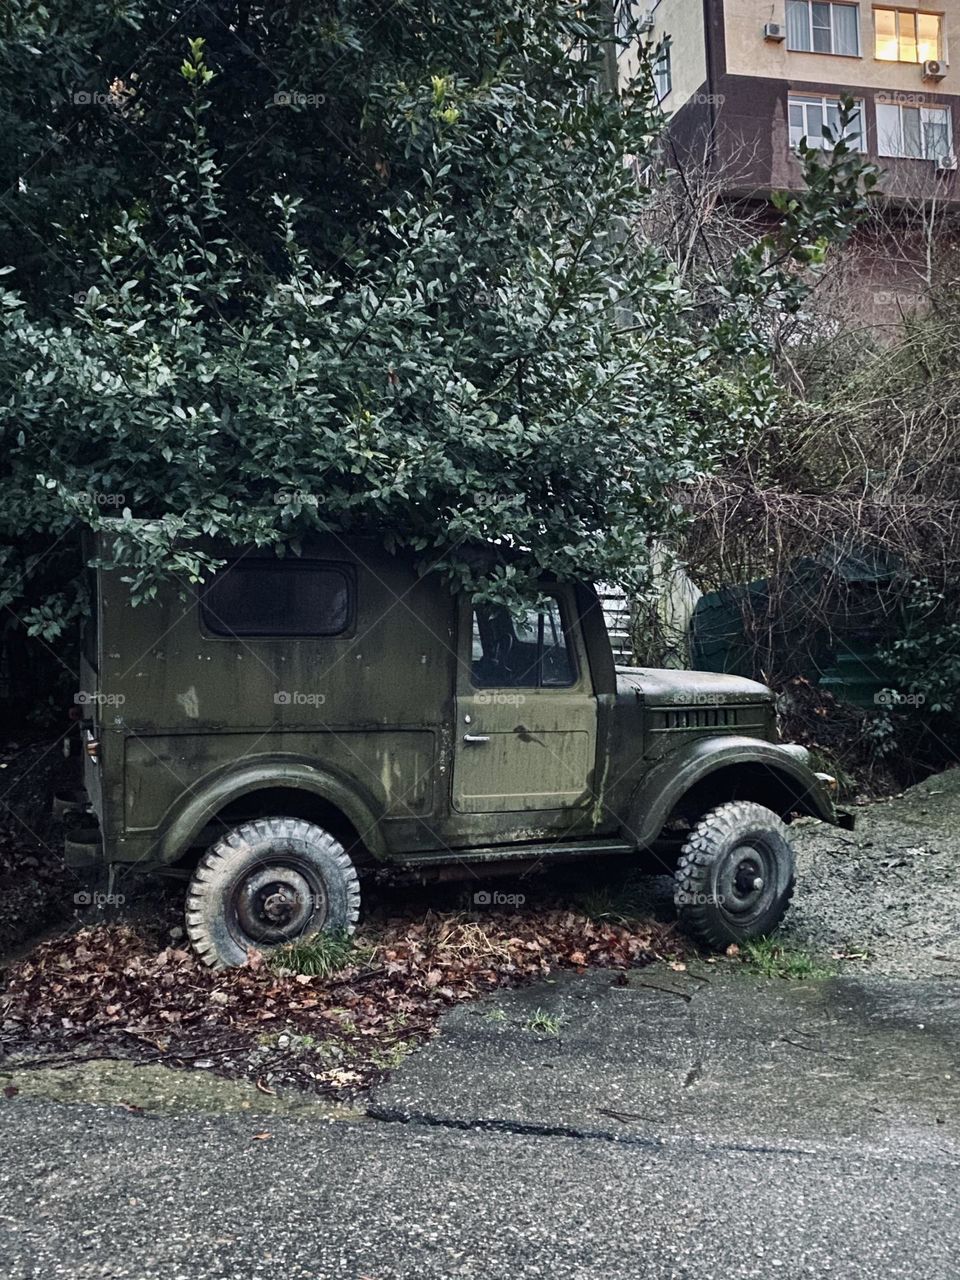 Retro military car among green plants